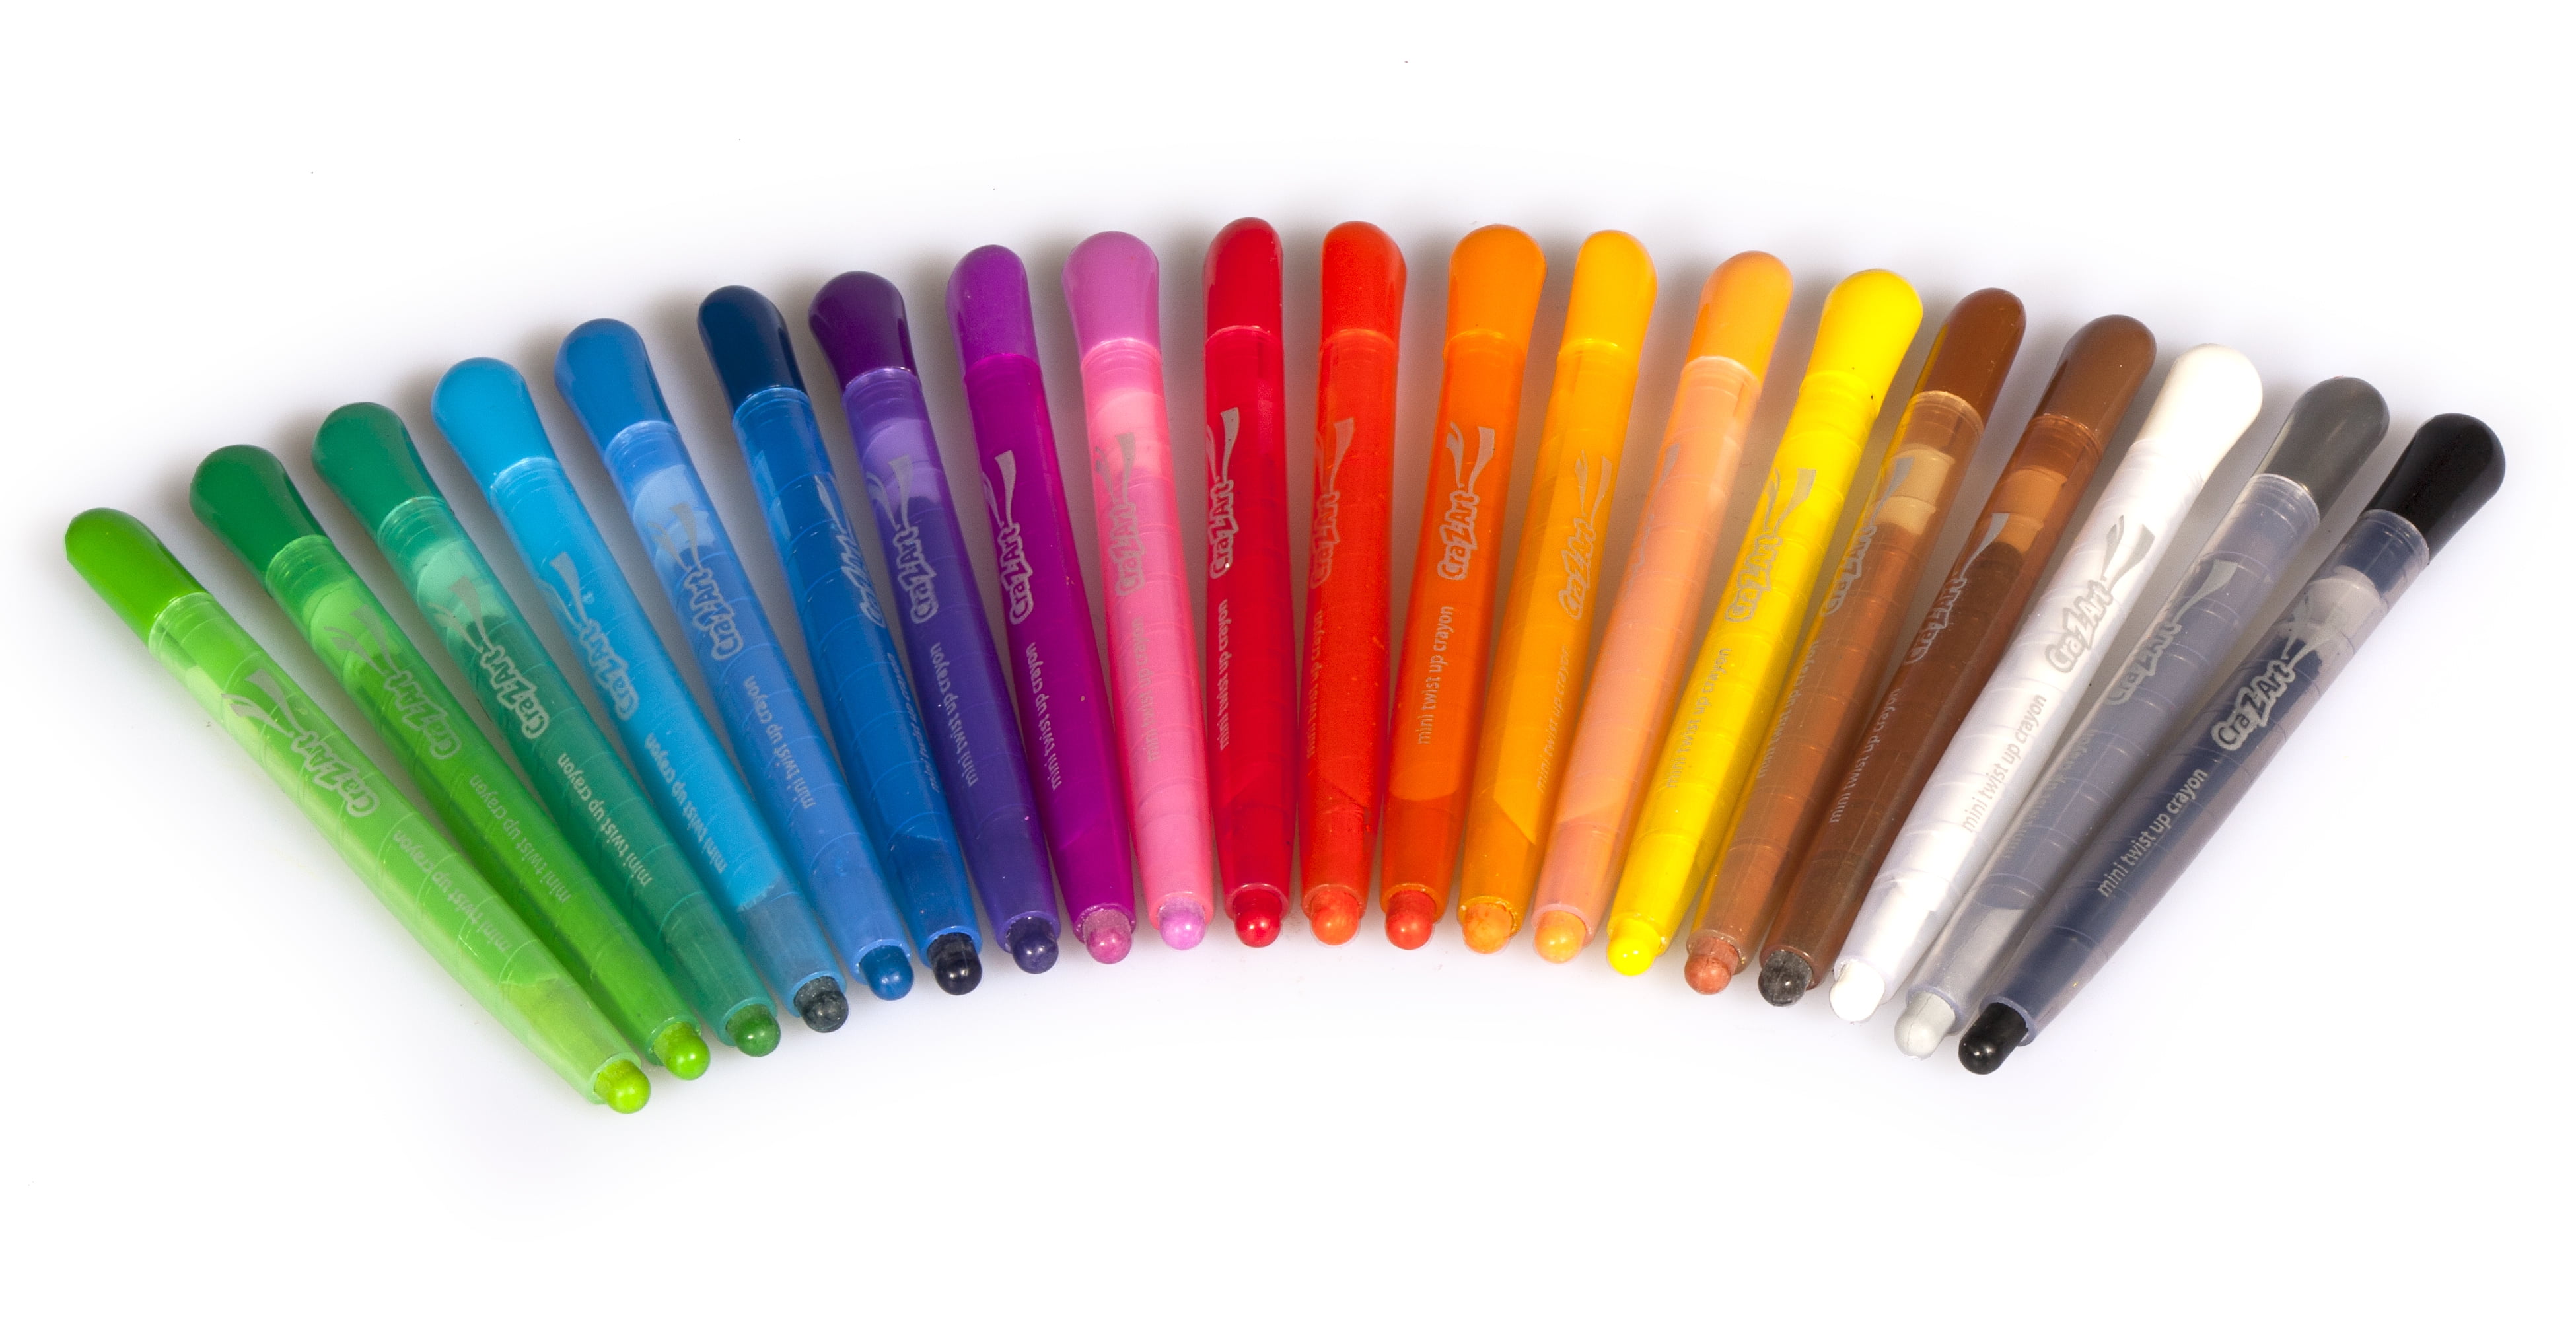 I Won't Buy Cra-Z-Art Crayons Again - Too Waxy, Clumpy & Soft